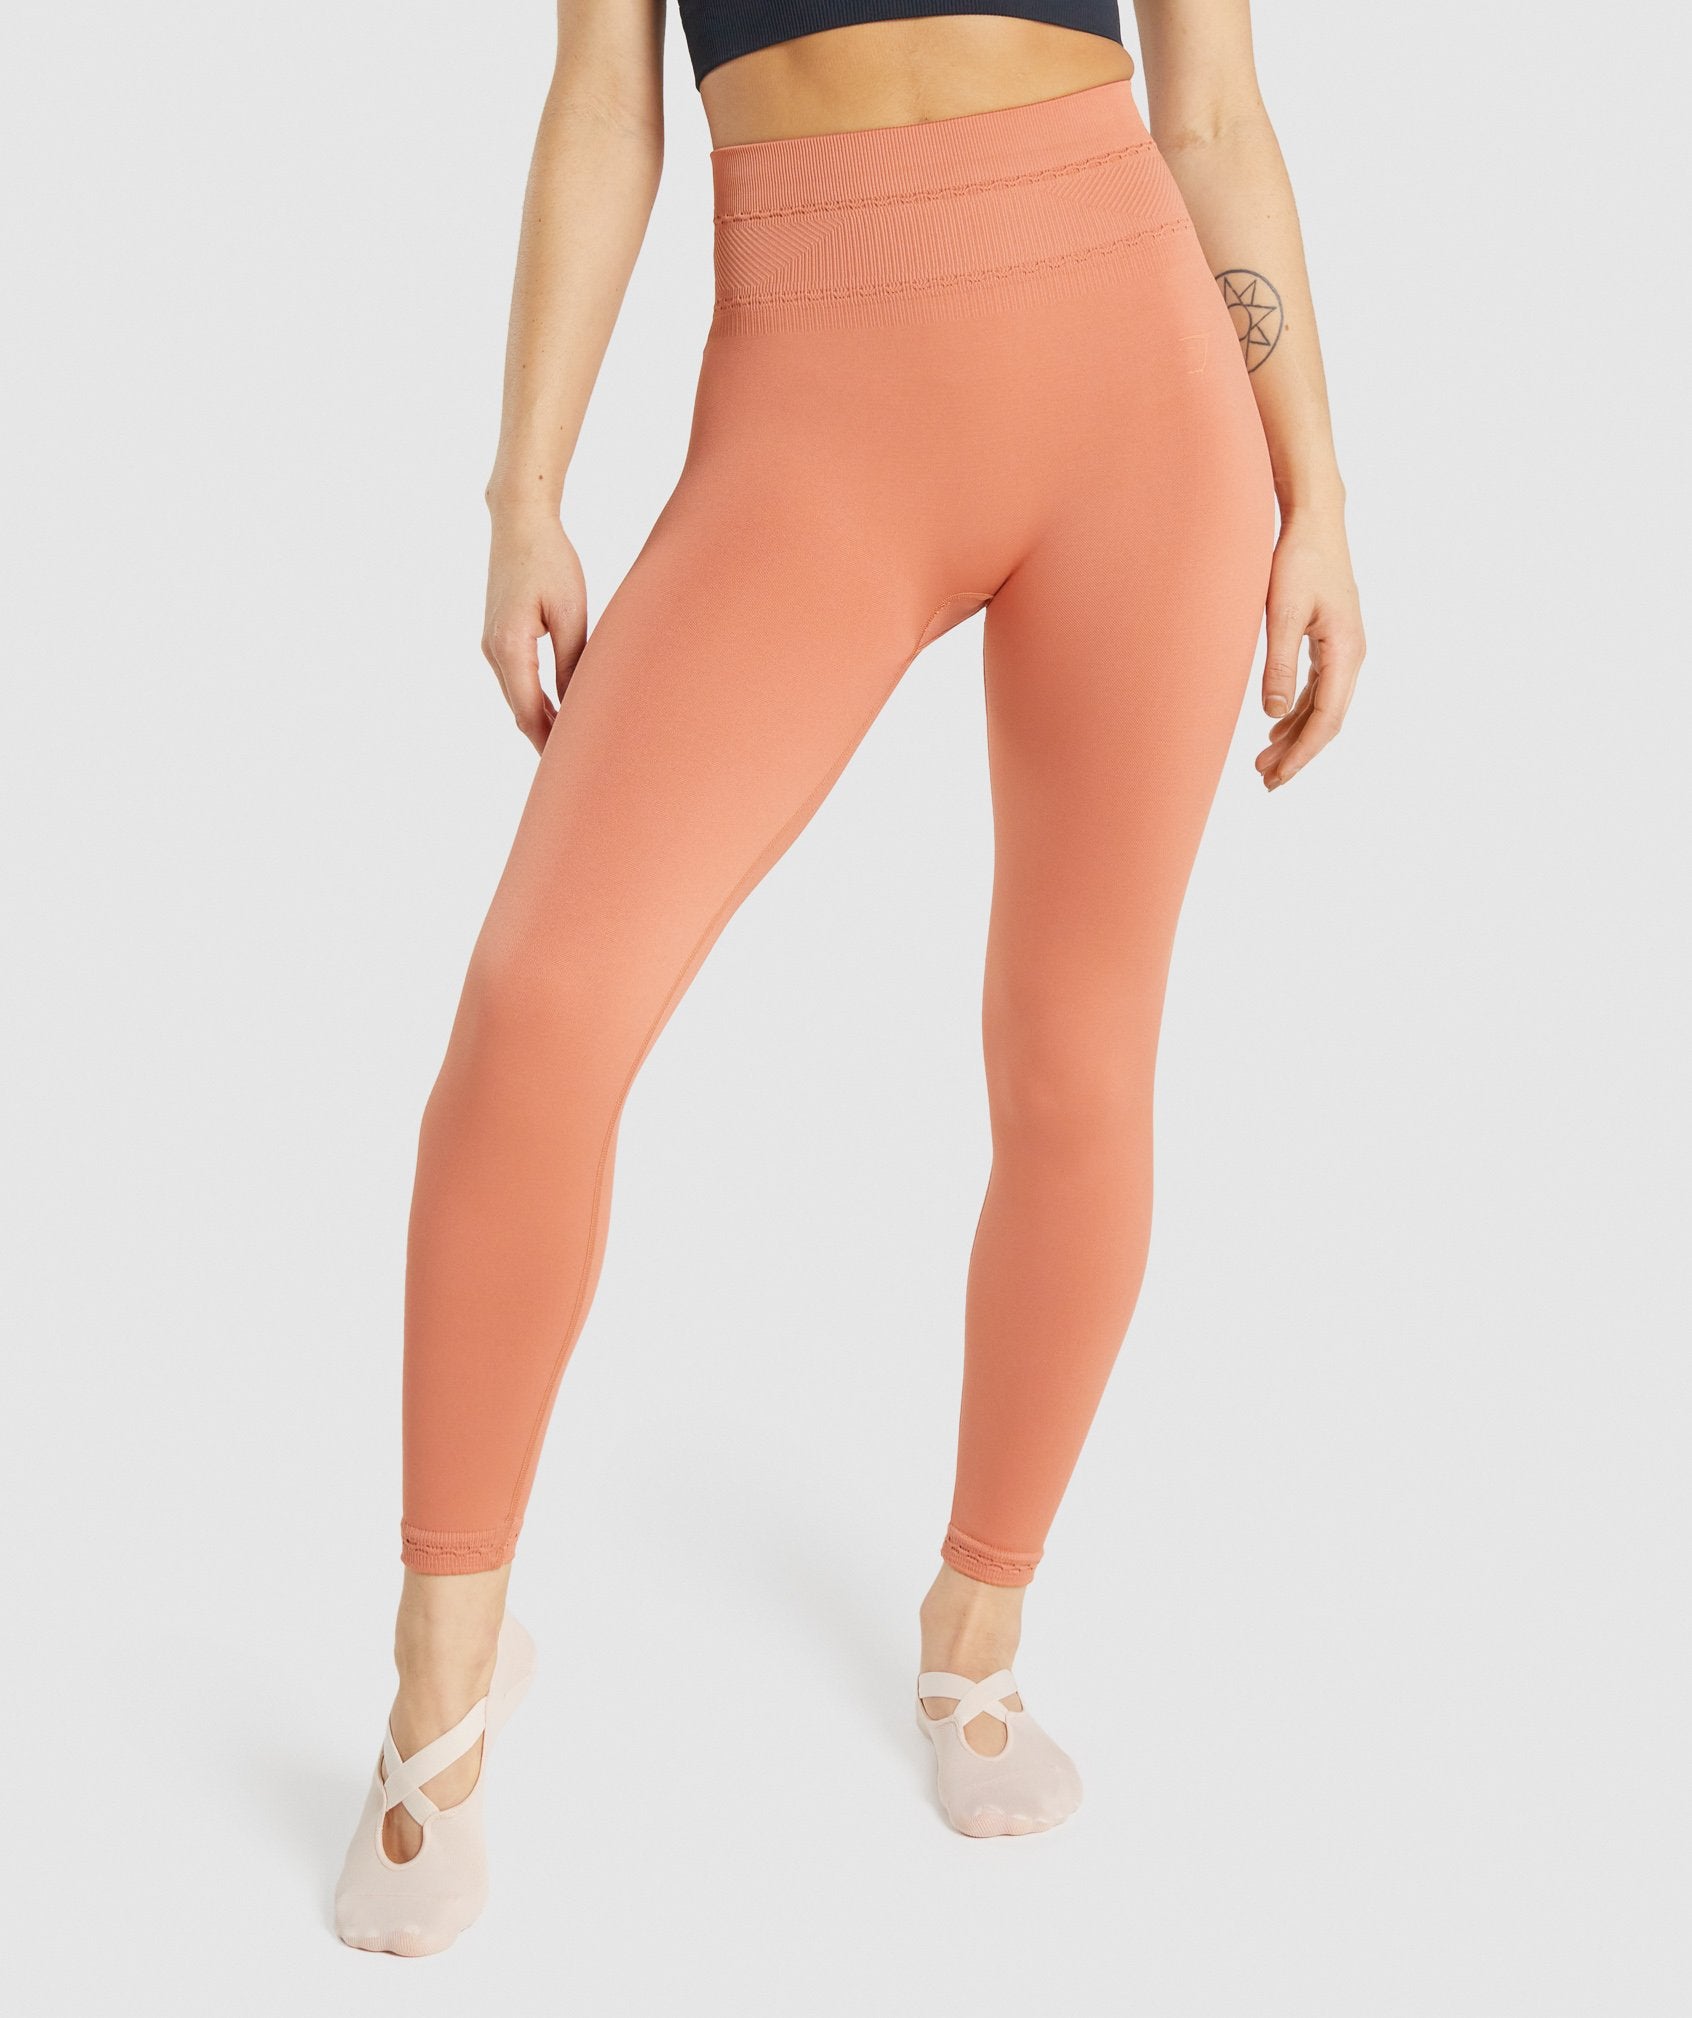 ✨Fun bid ✨ Gymshark leggings Size small Color purplish Condition 10/10  Staring bid $1 Bin 24 free shipping